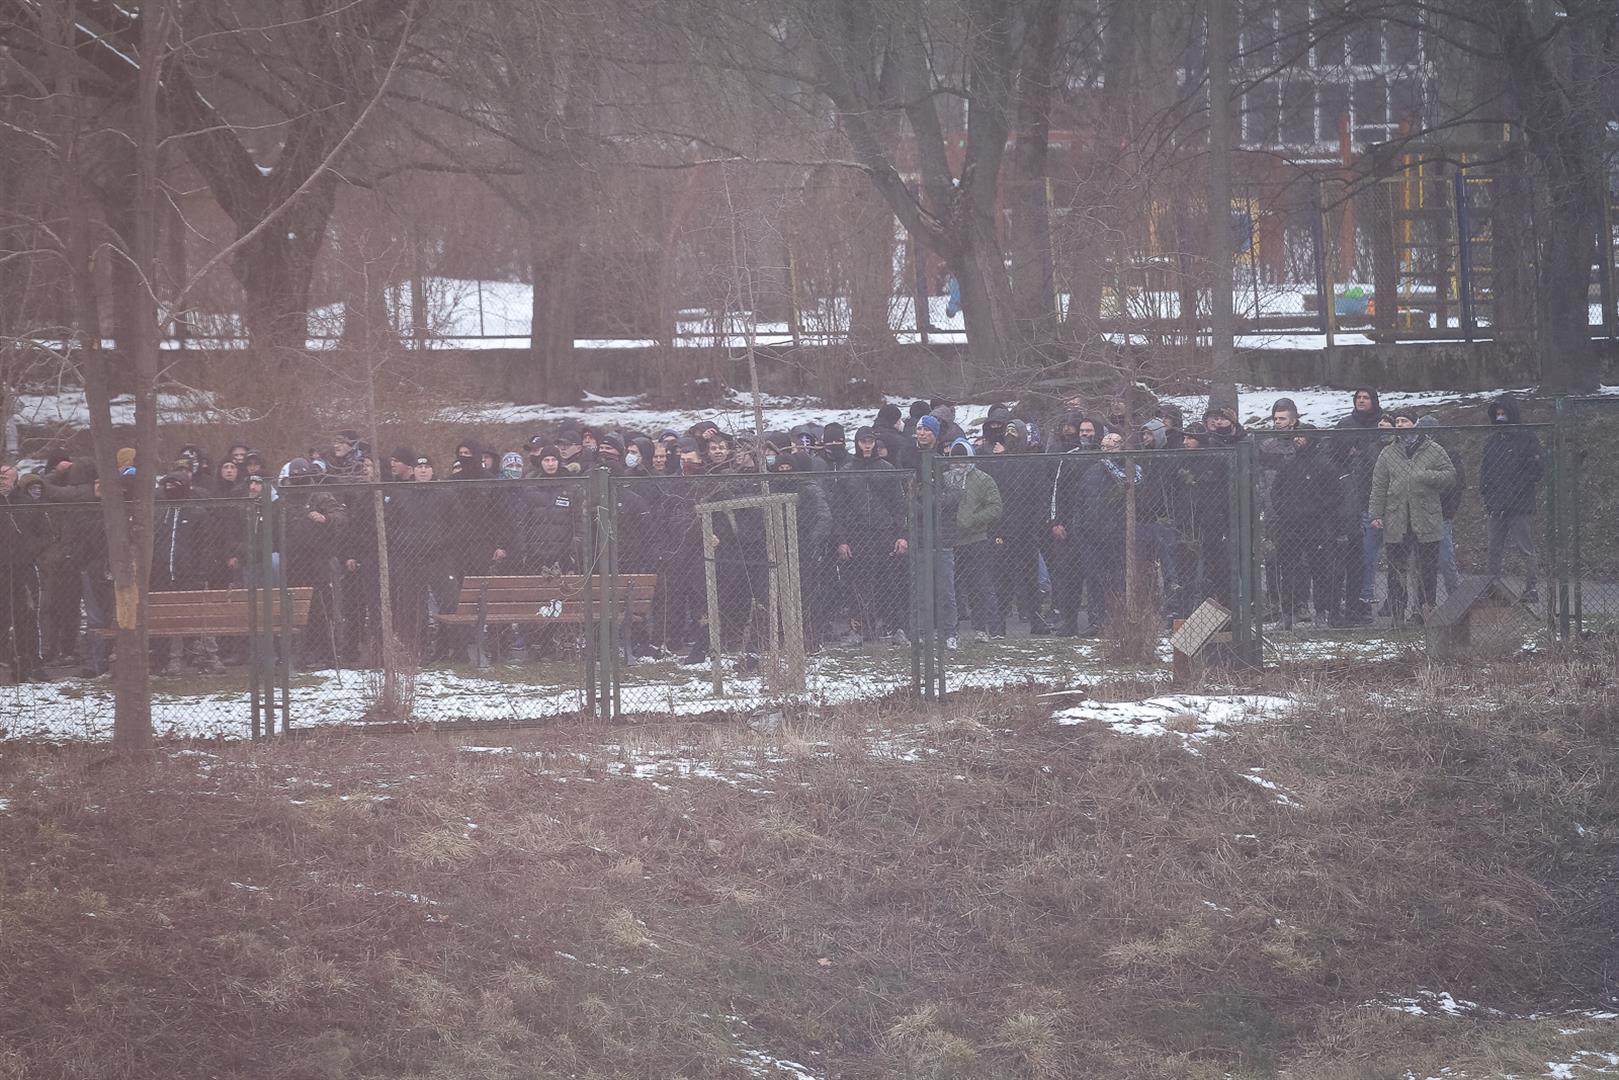 Tłum kibiców pod stadionem Stomilu Olsztyn